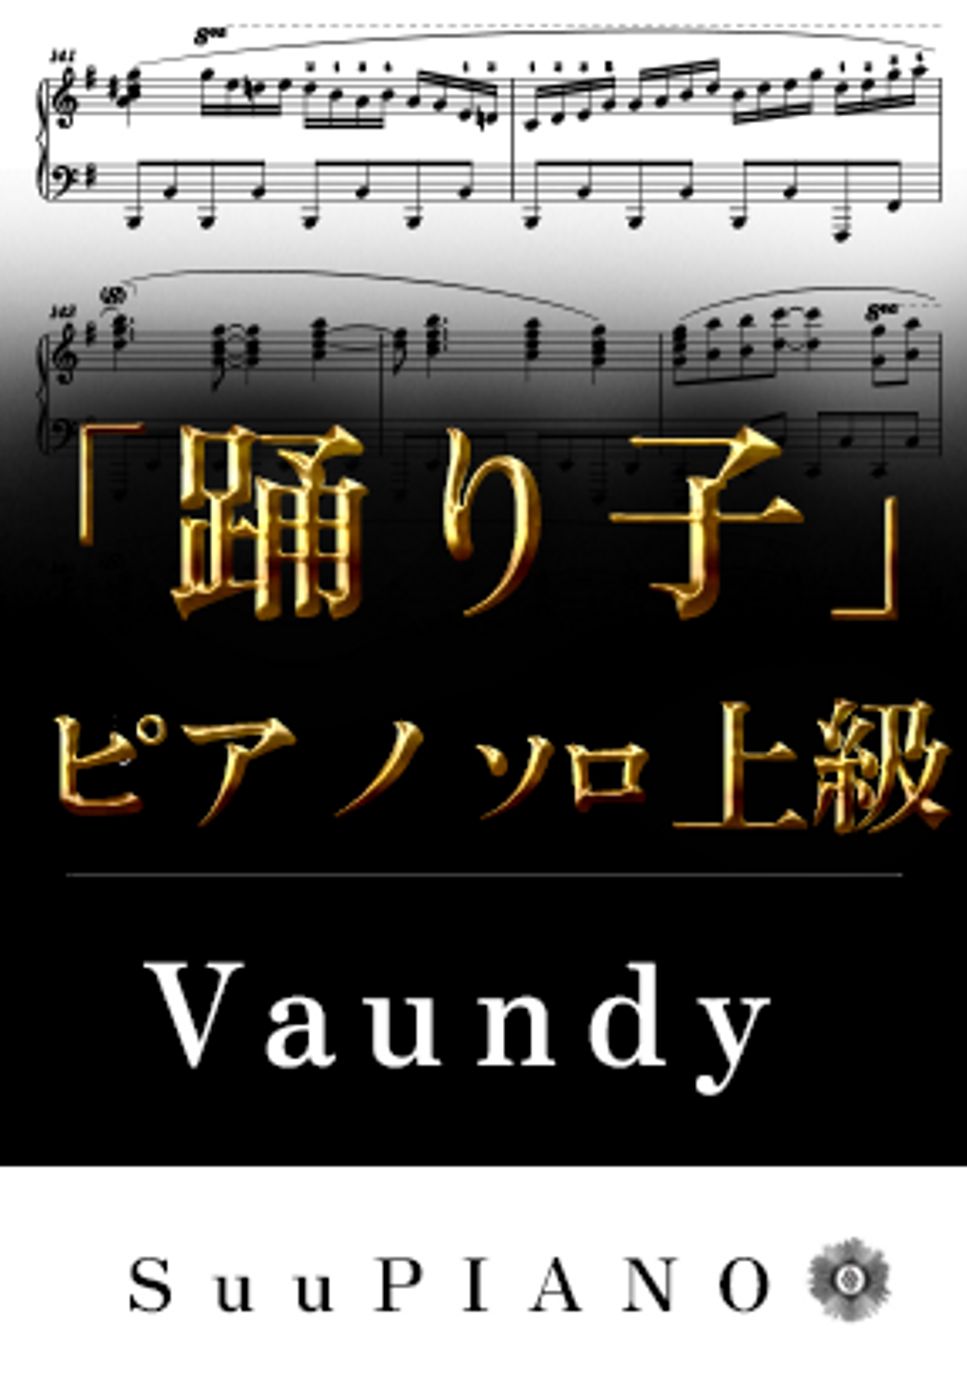 vaundy - 踊り子 (ピアノソロ上級) by Suu